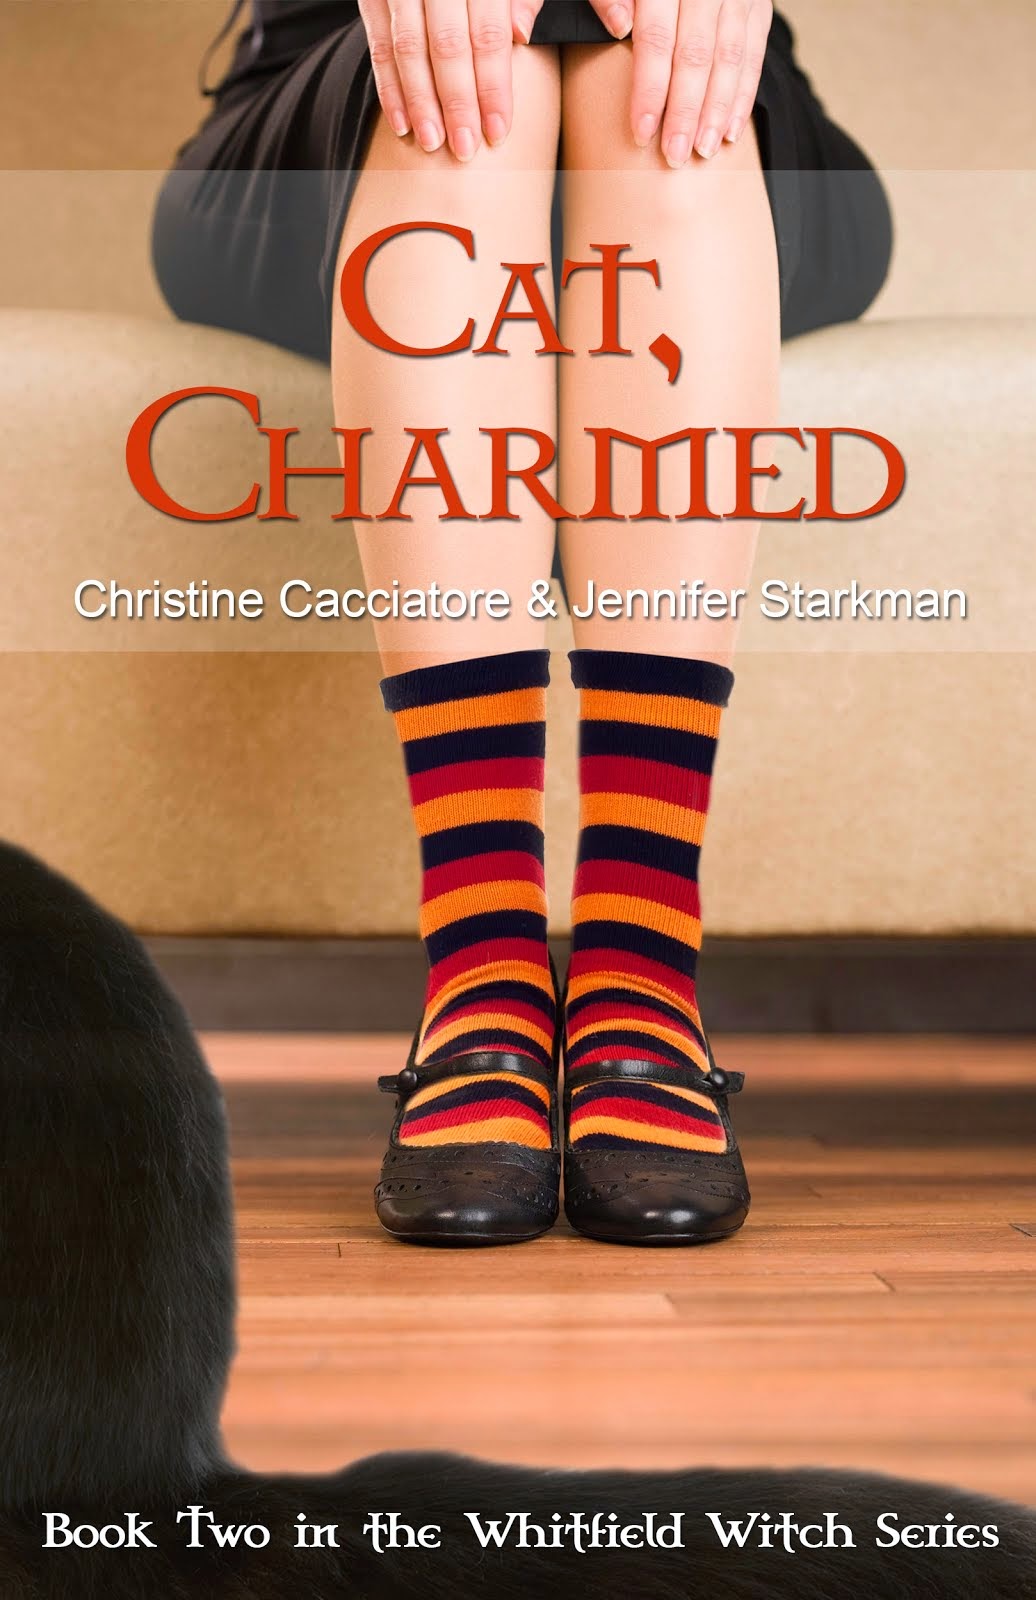 Cat, Charmed